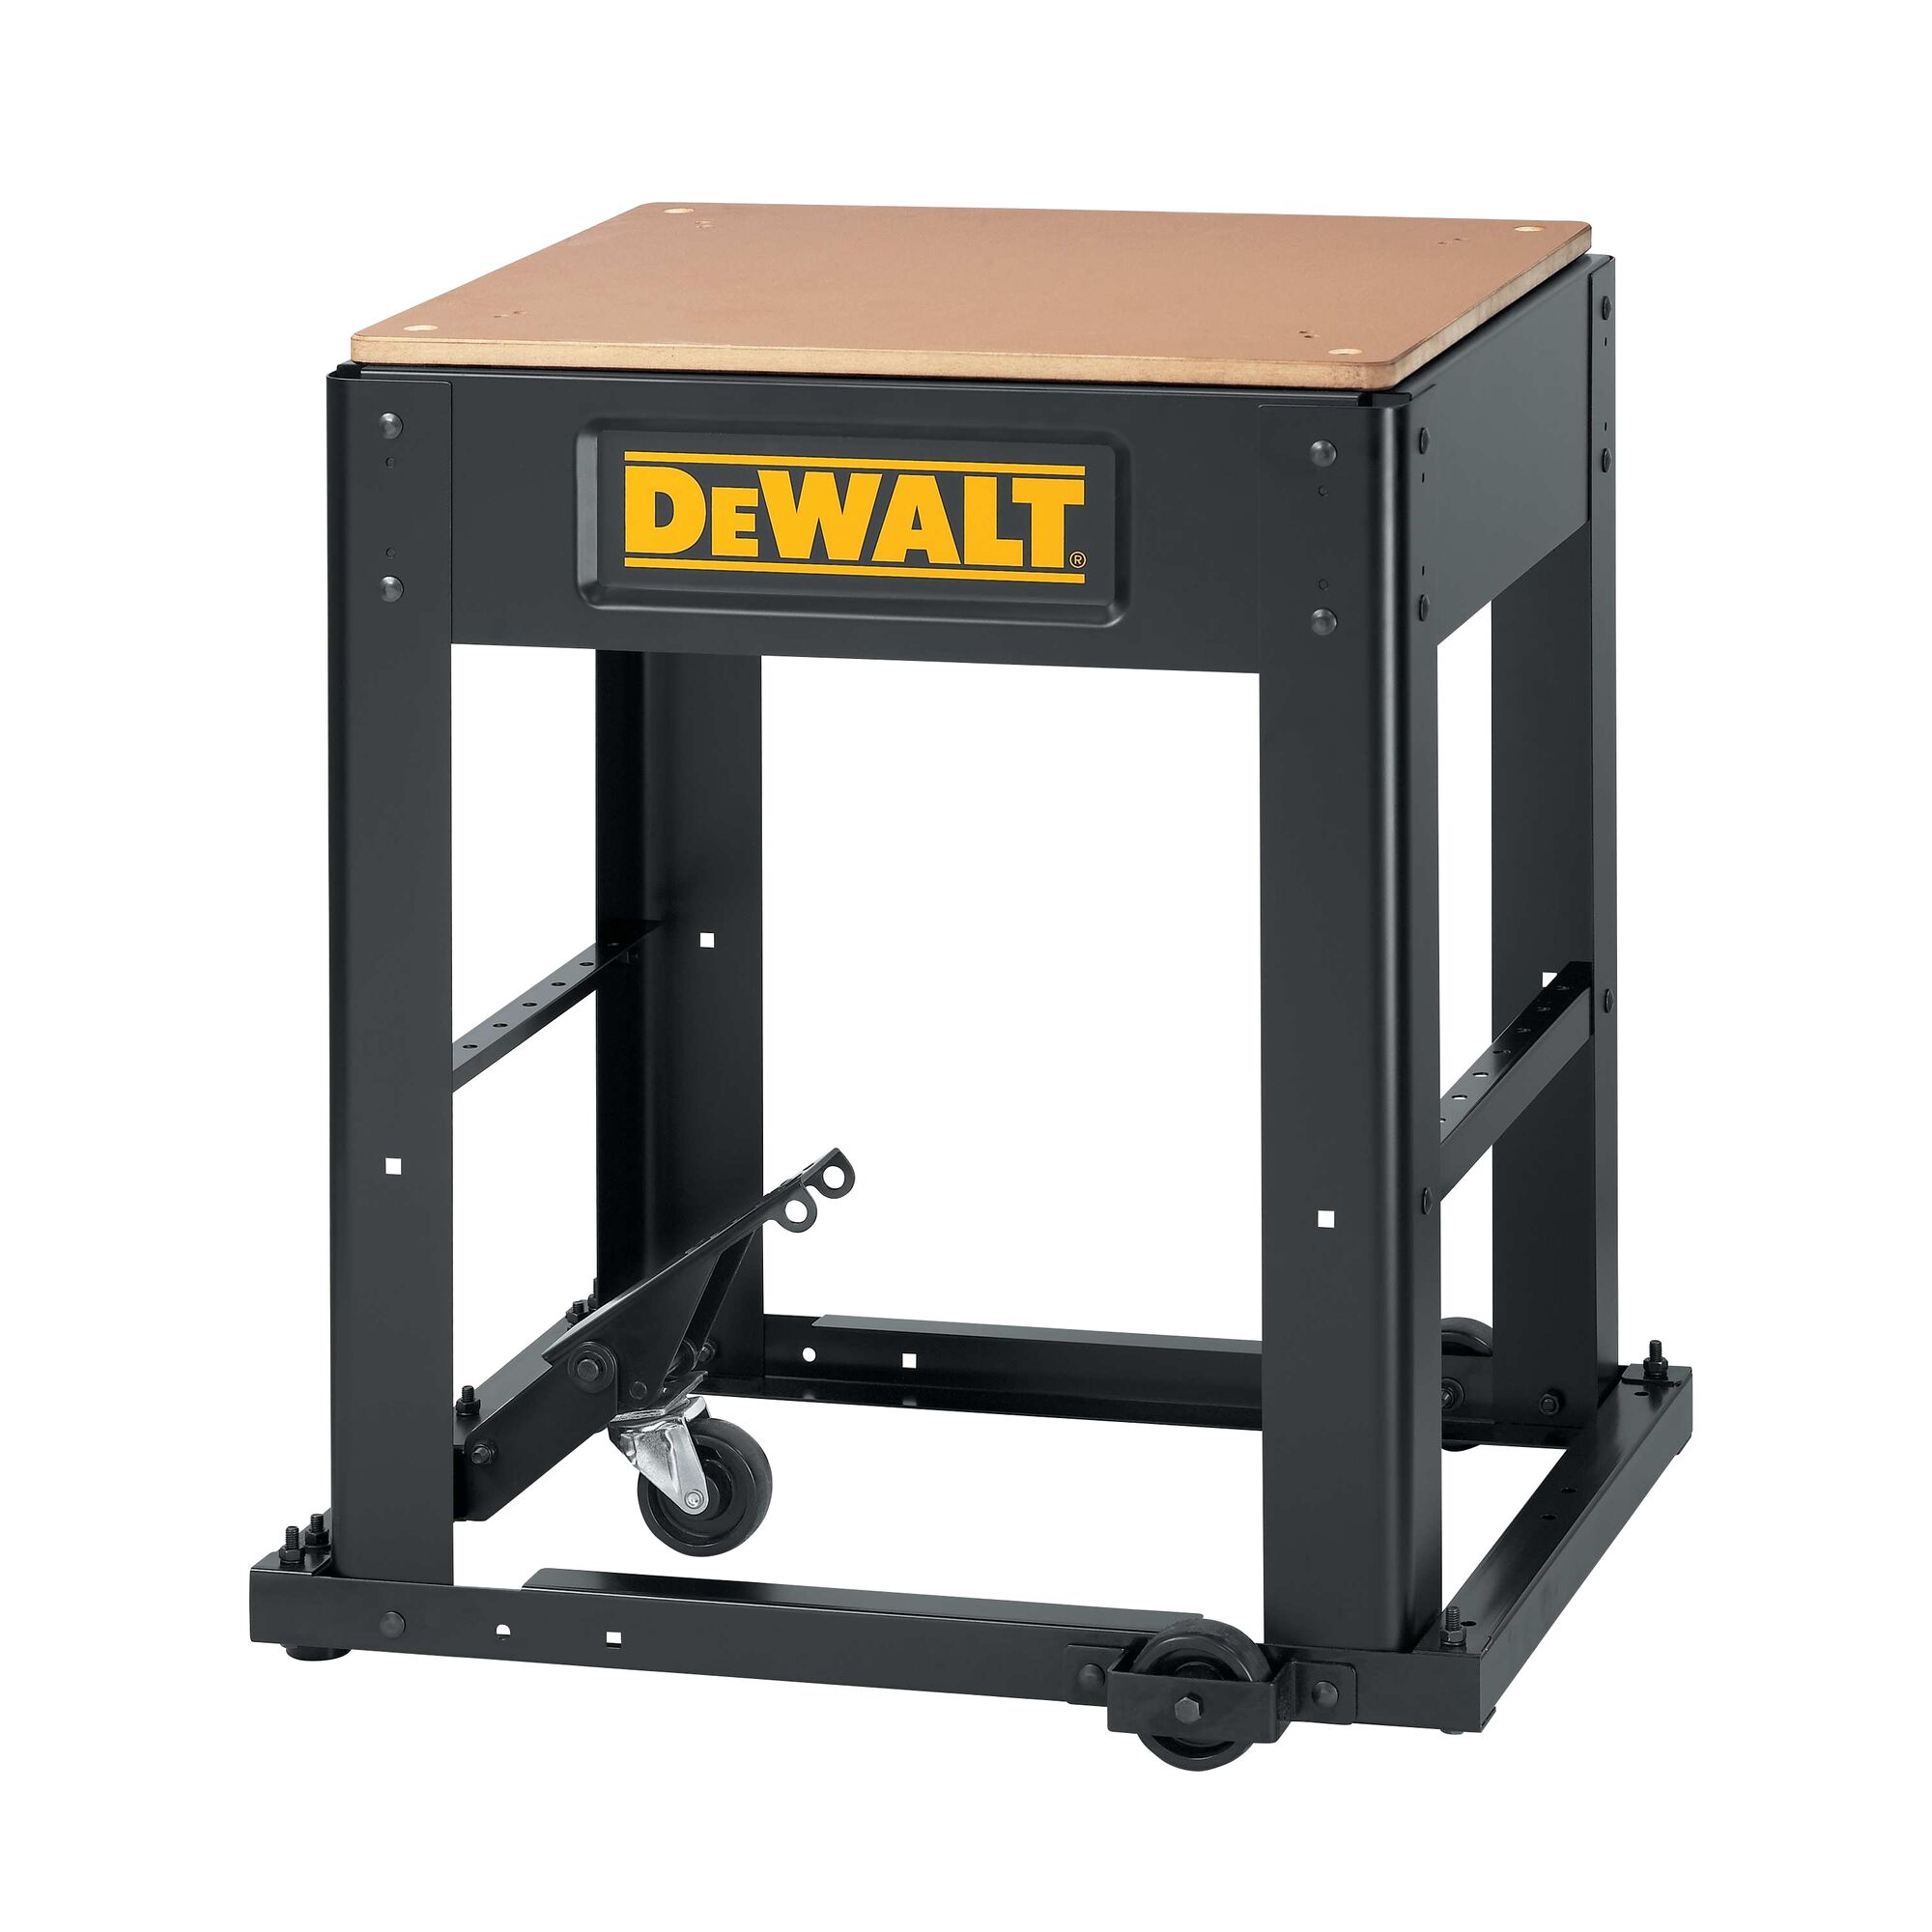 Walnut stand for DeWalt 735 planer - General Woodworking - The Patriot  Woodworker